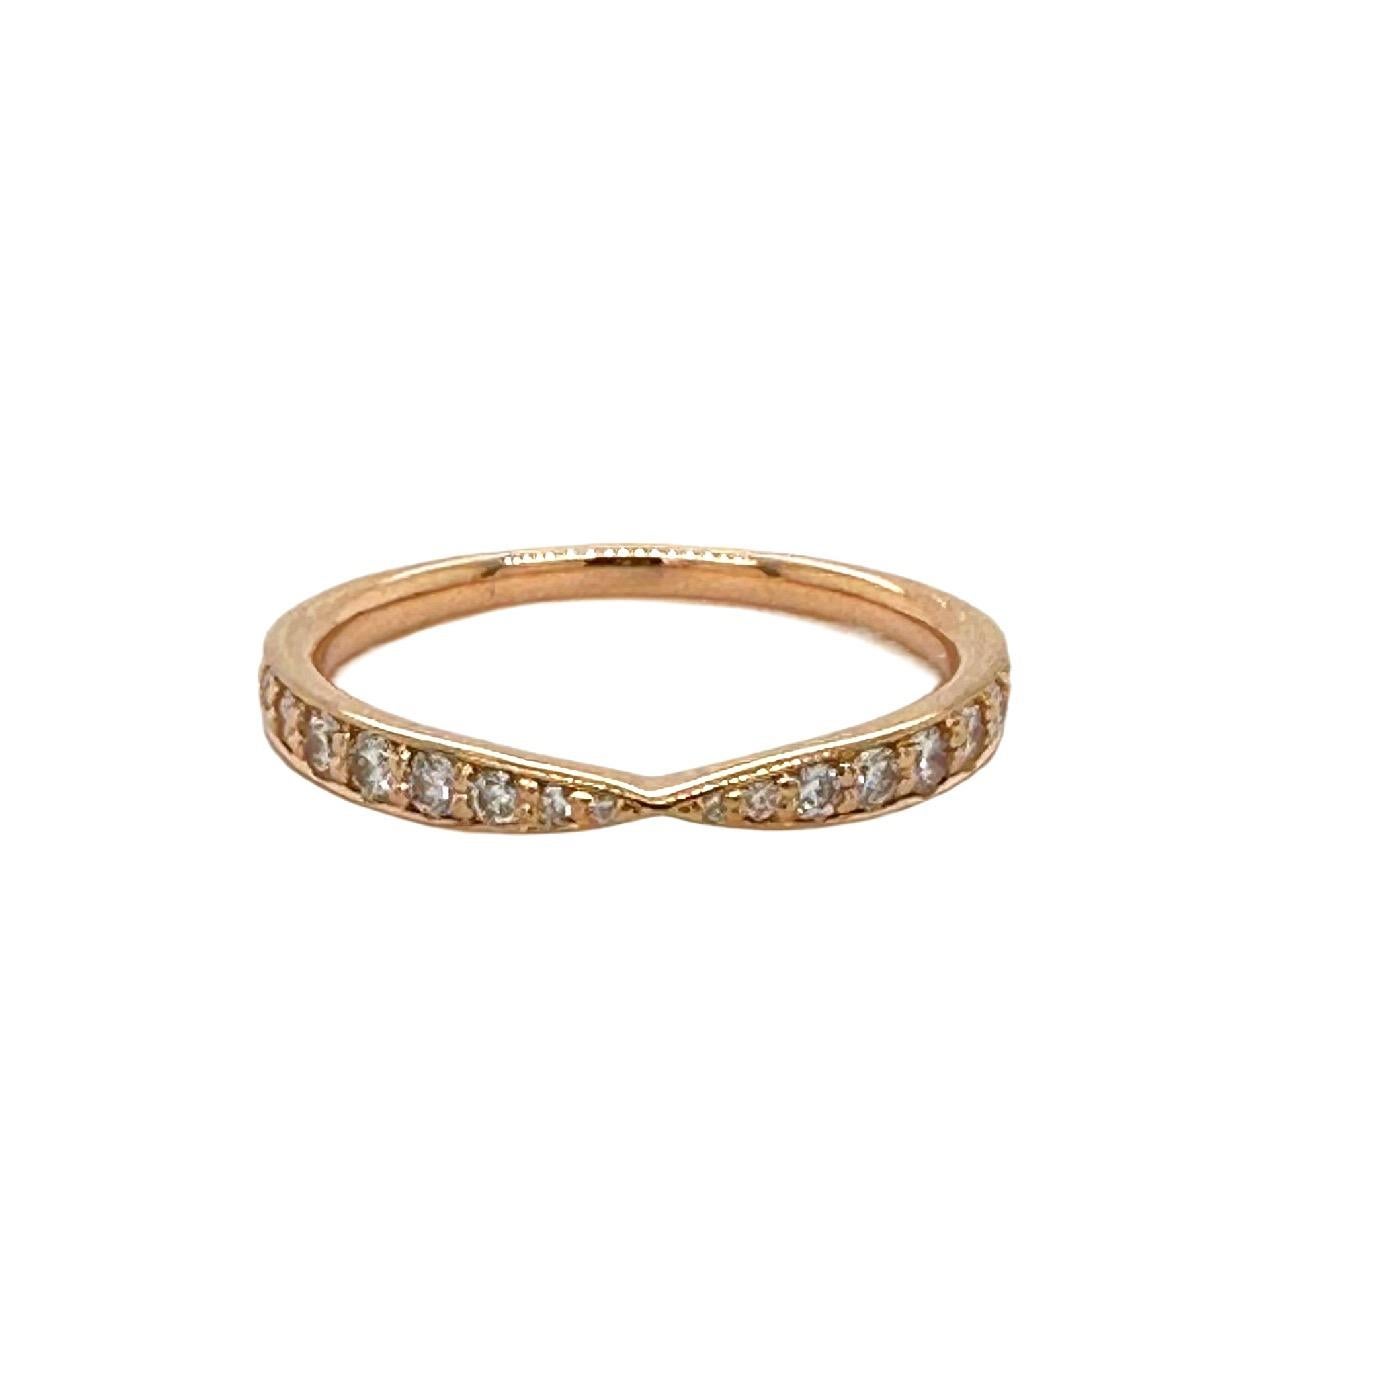 Tiffany & Co. Harmony Diamond Band Ring
Stil:  Band
Referenznummer:  60004597
Metall:  18kt Rose Gold
Größe:  6
Breite:  1.8 MM
TCW:  0,23 tcw
Hauptdiamant:  20 runde Brillantdiamanten
Farbe & Klarheit:  G, VS
Wahrzeichen:  ©TIFFANY&CO.